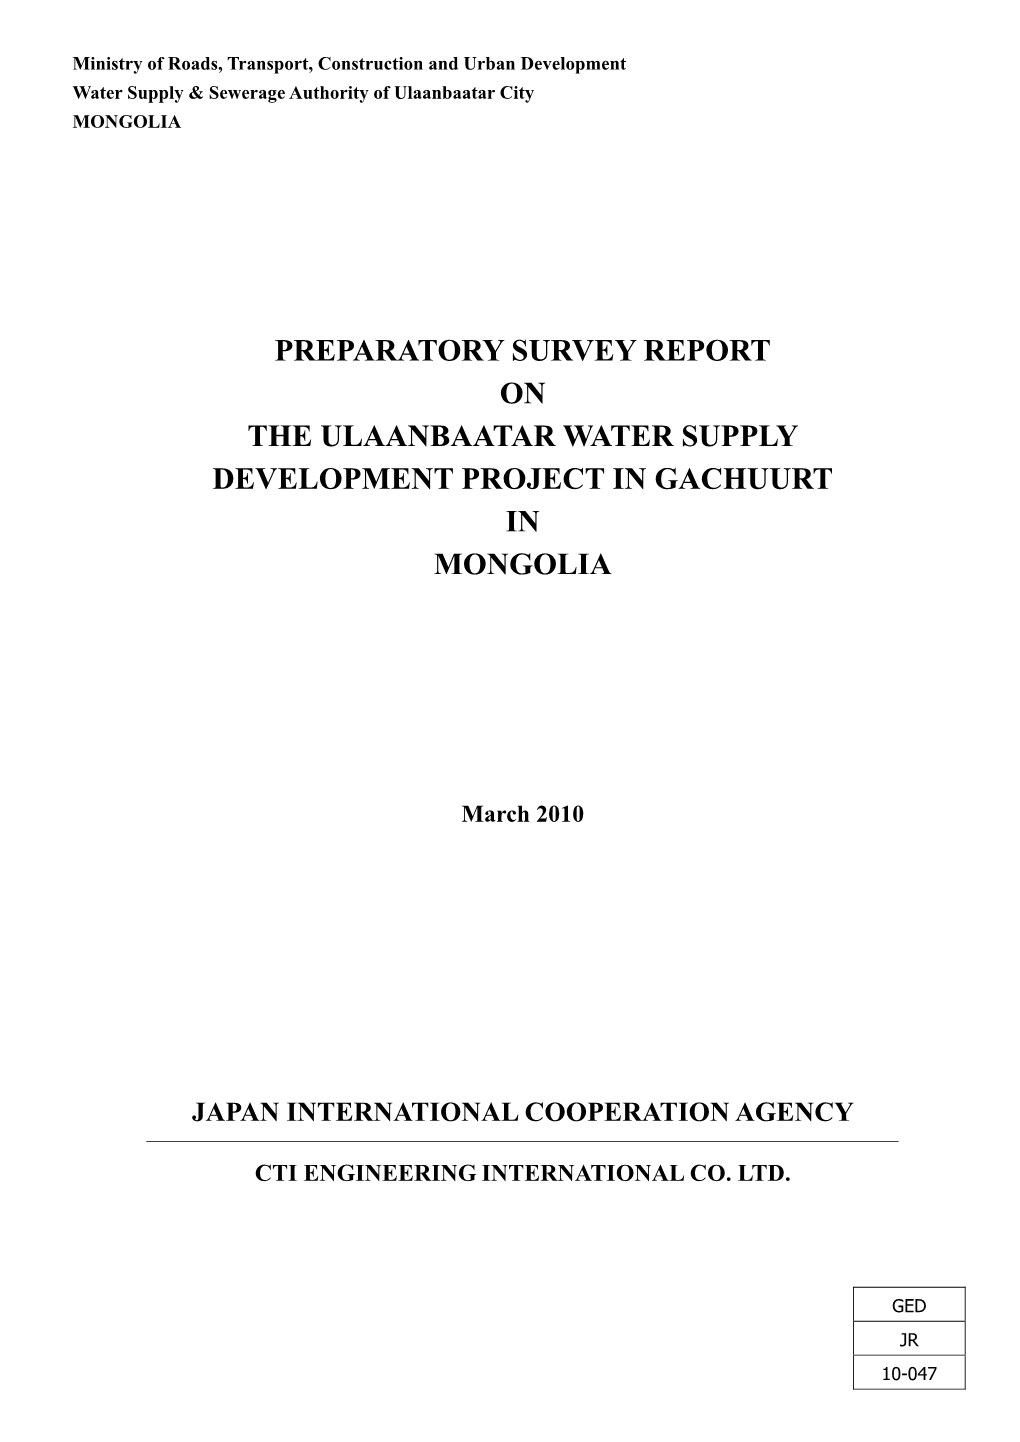 Preparatory Survey Report on the Ulaanbaatar Water Supply Development Project in Gachuurt in Mongolia